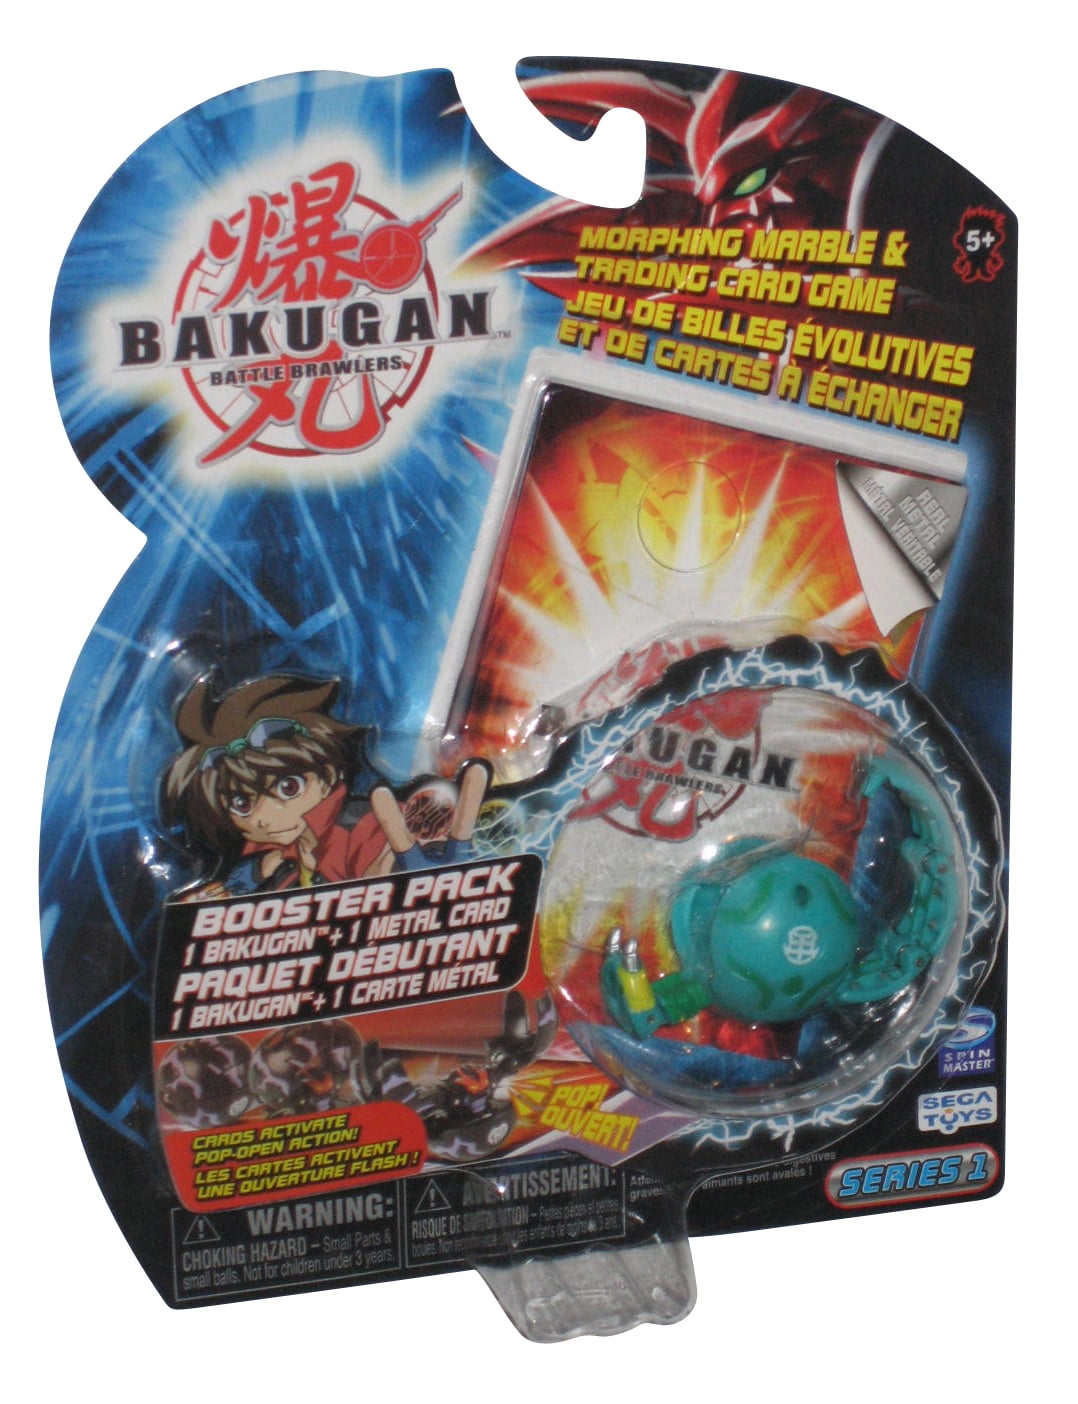 Bakugan Booster Pack & Metal Card Series 1 Spin Master Toy Walmart.com